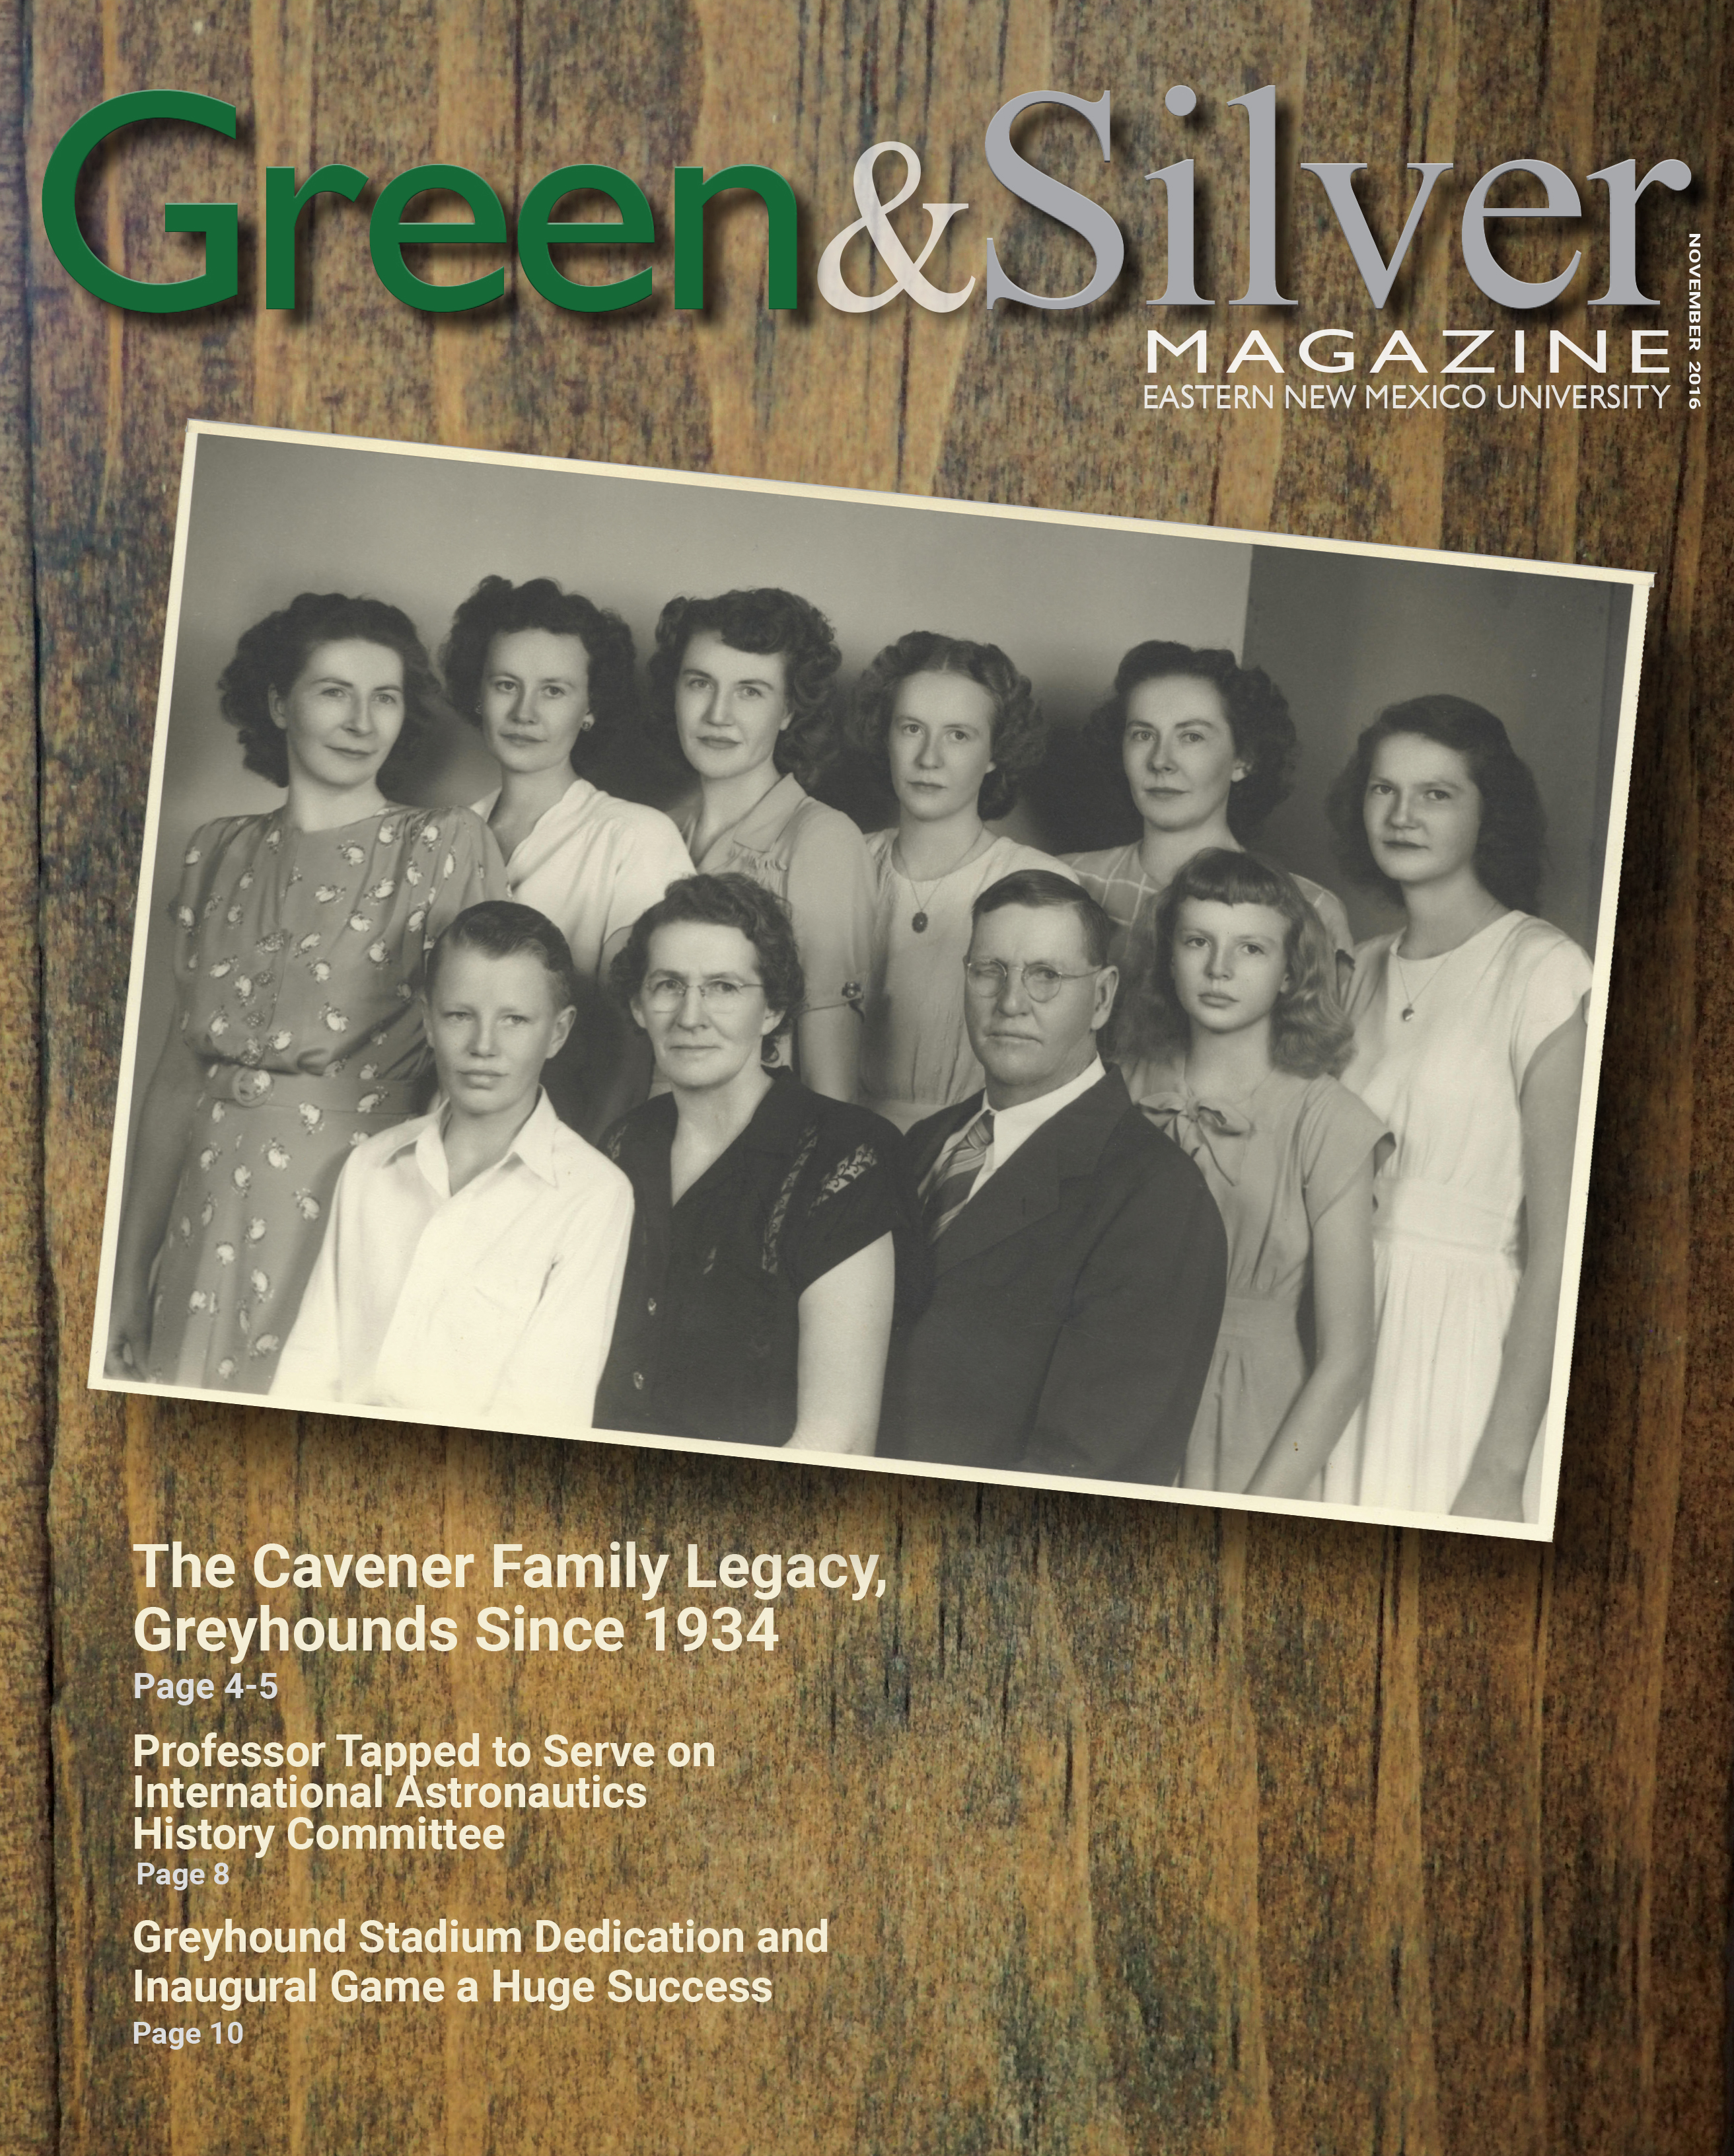 Green & Silver Magazine November 2016 cover